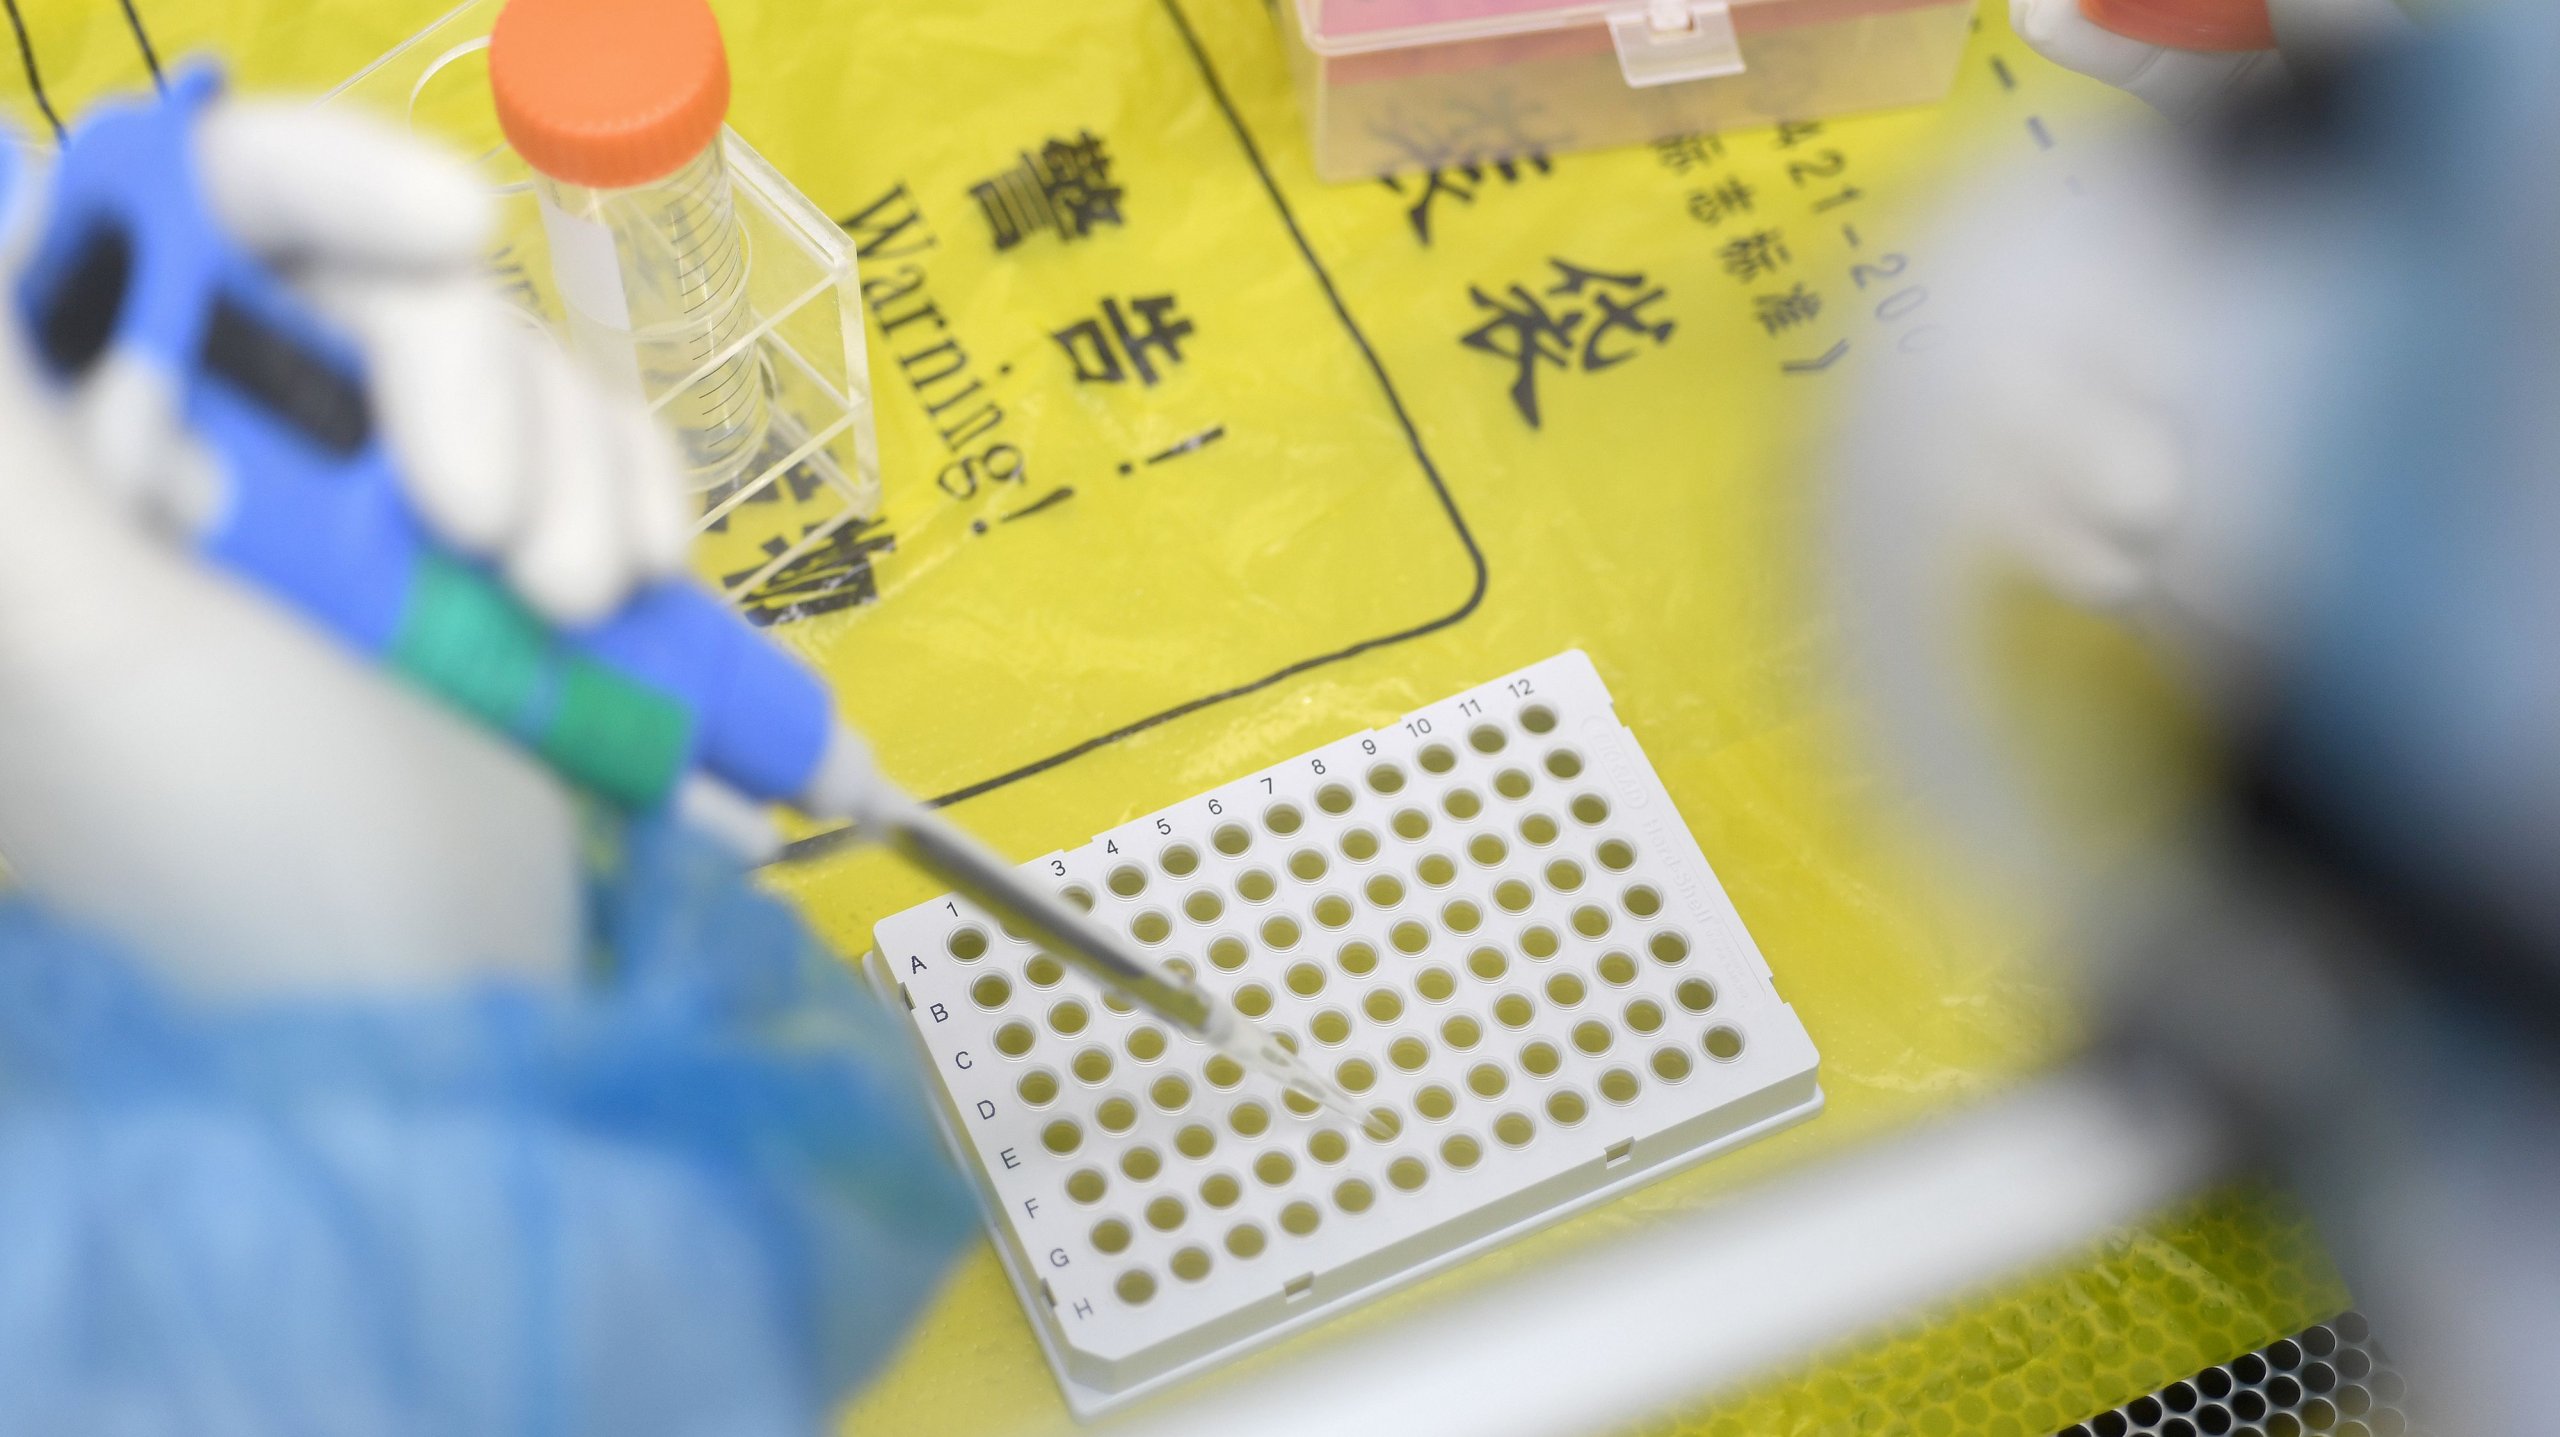 O Instituto de Virologia de Wuhan já estudava coronavírus antes da pandemia